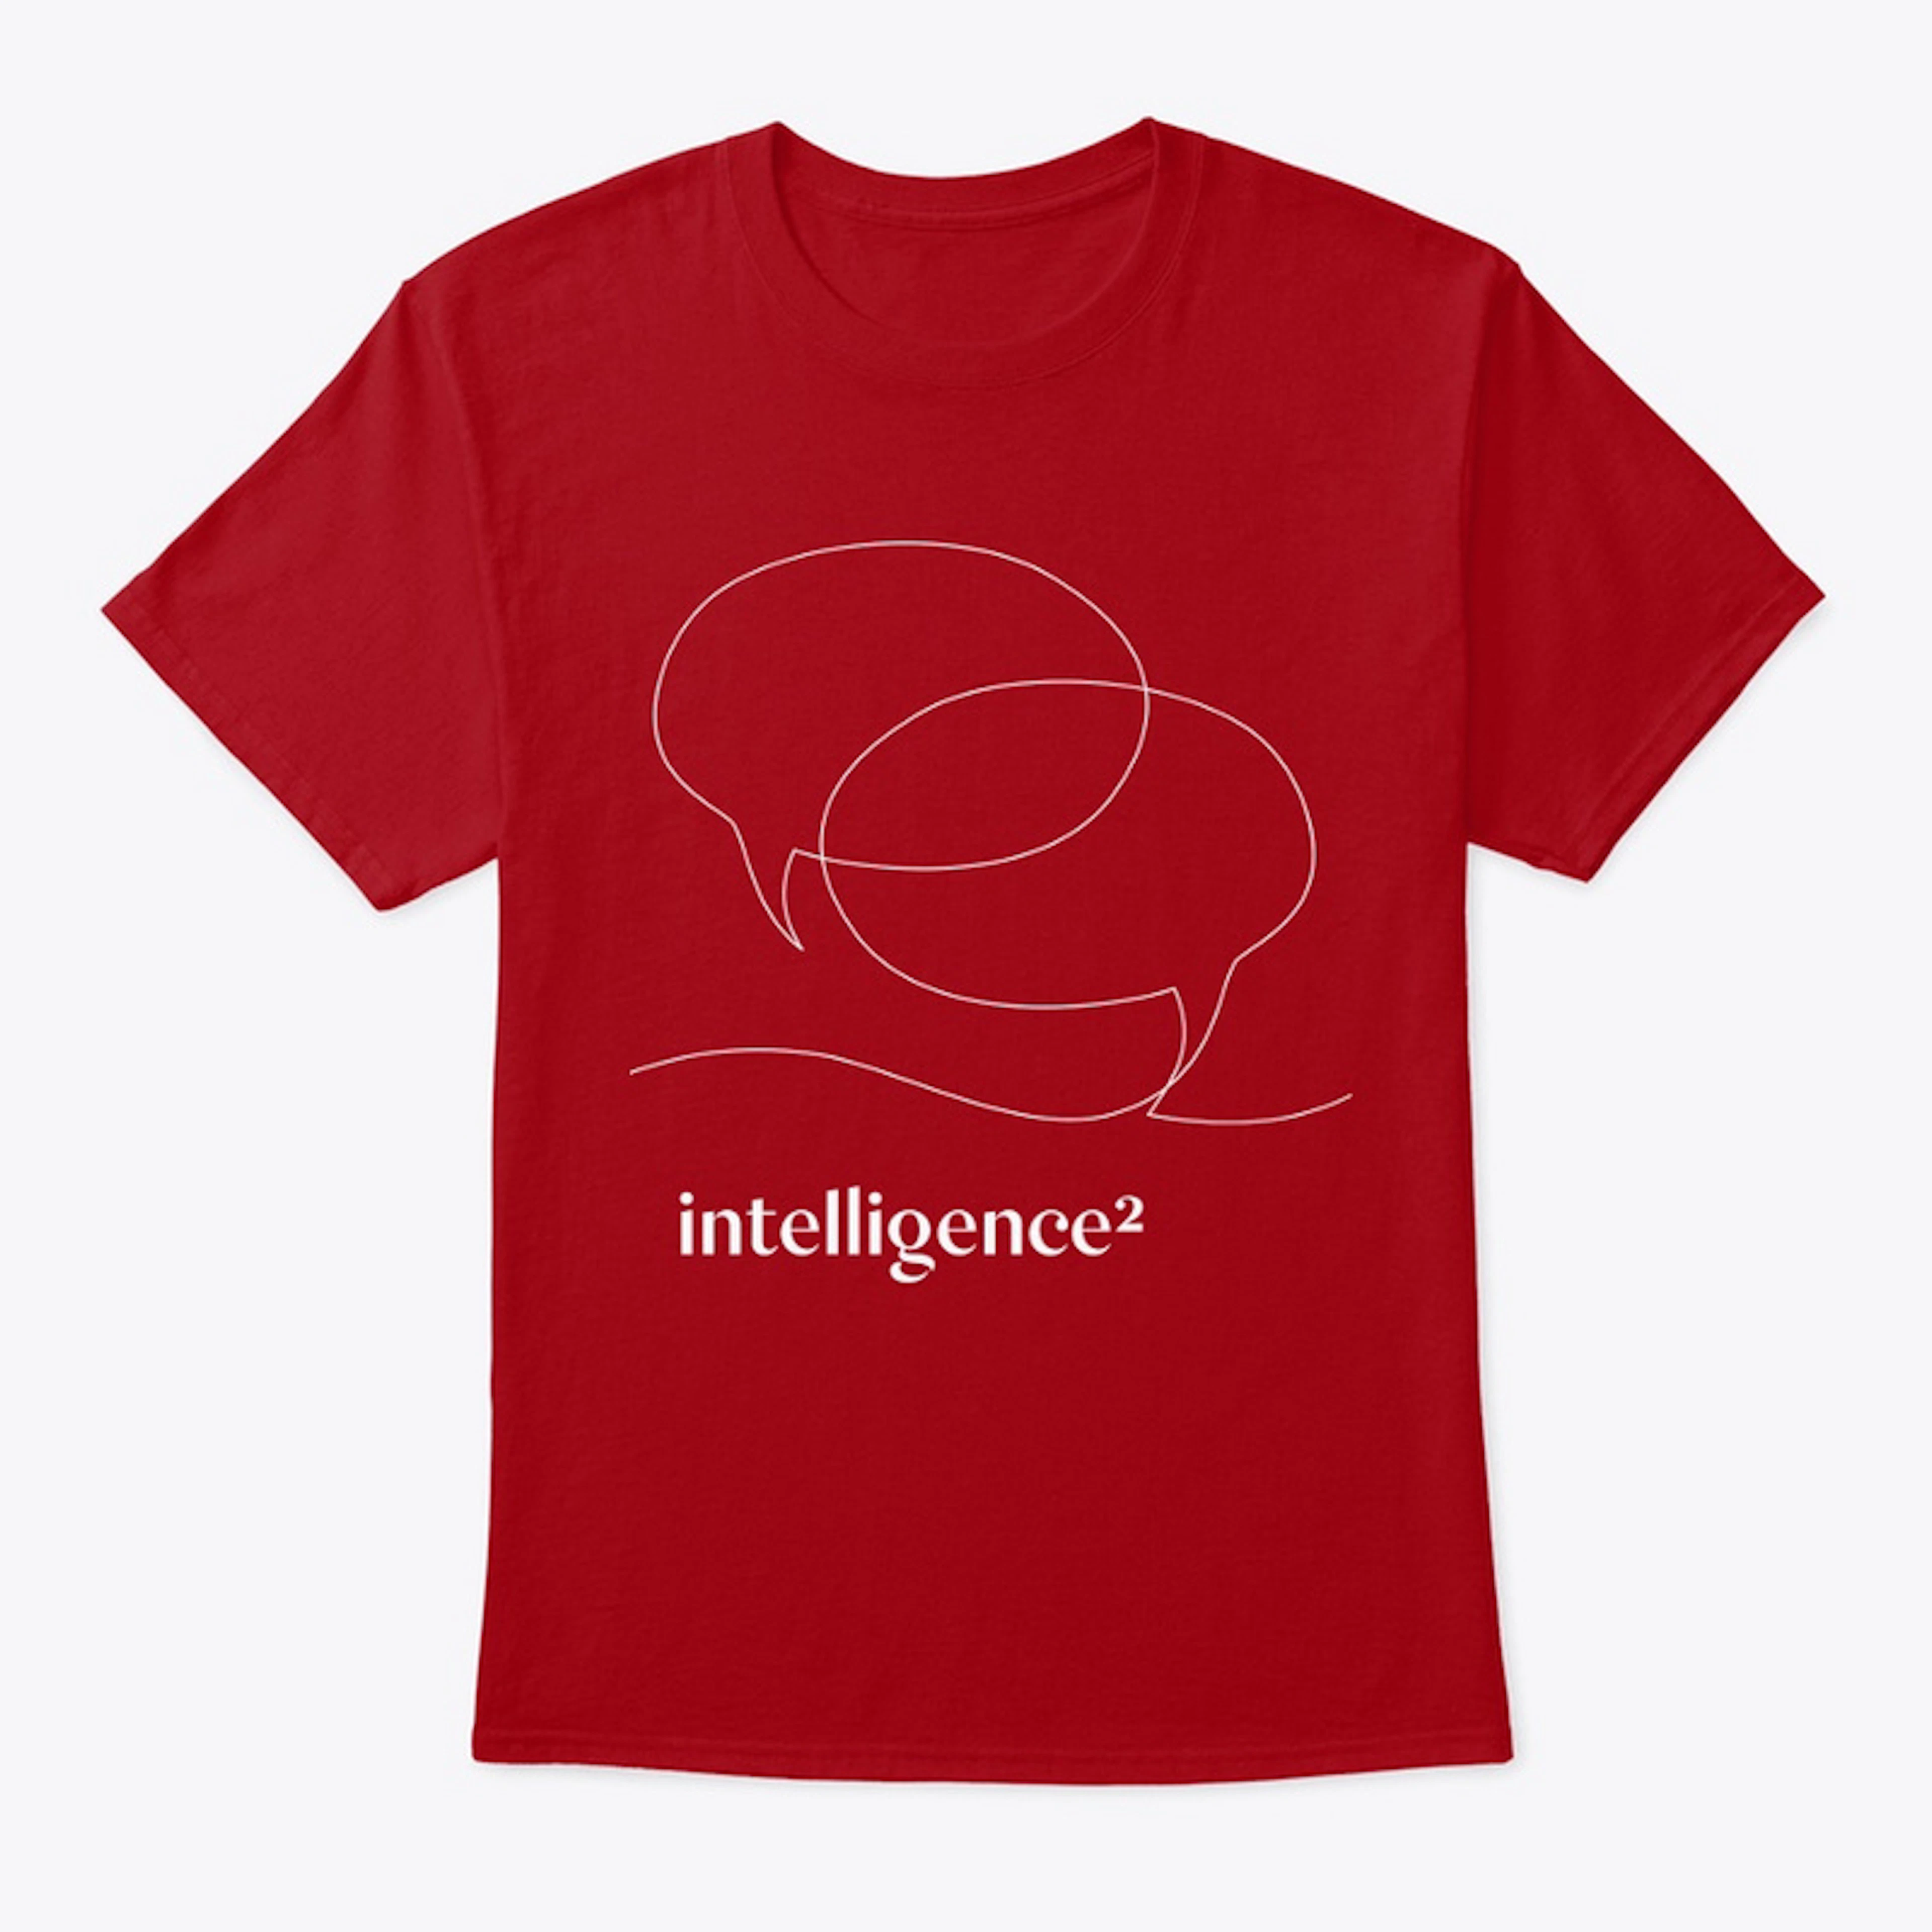 Intelligence Squared tee - white print